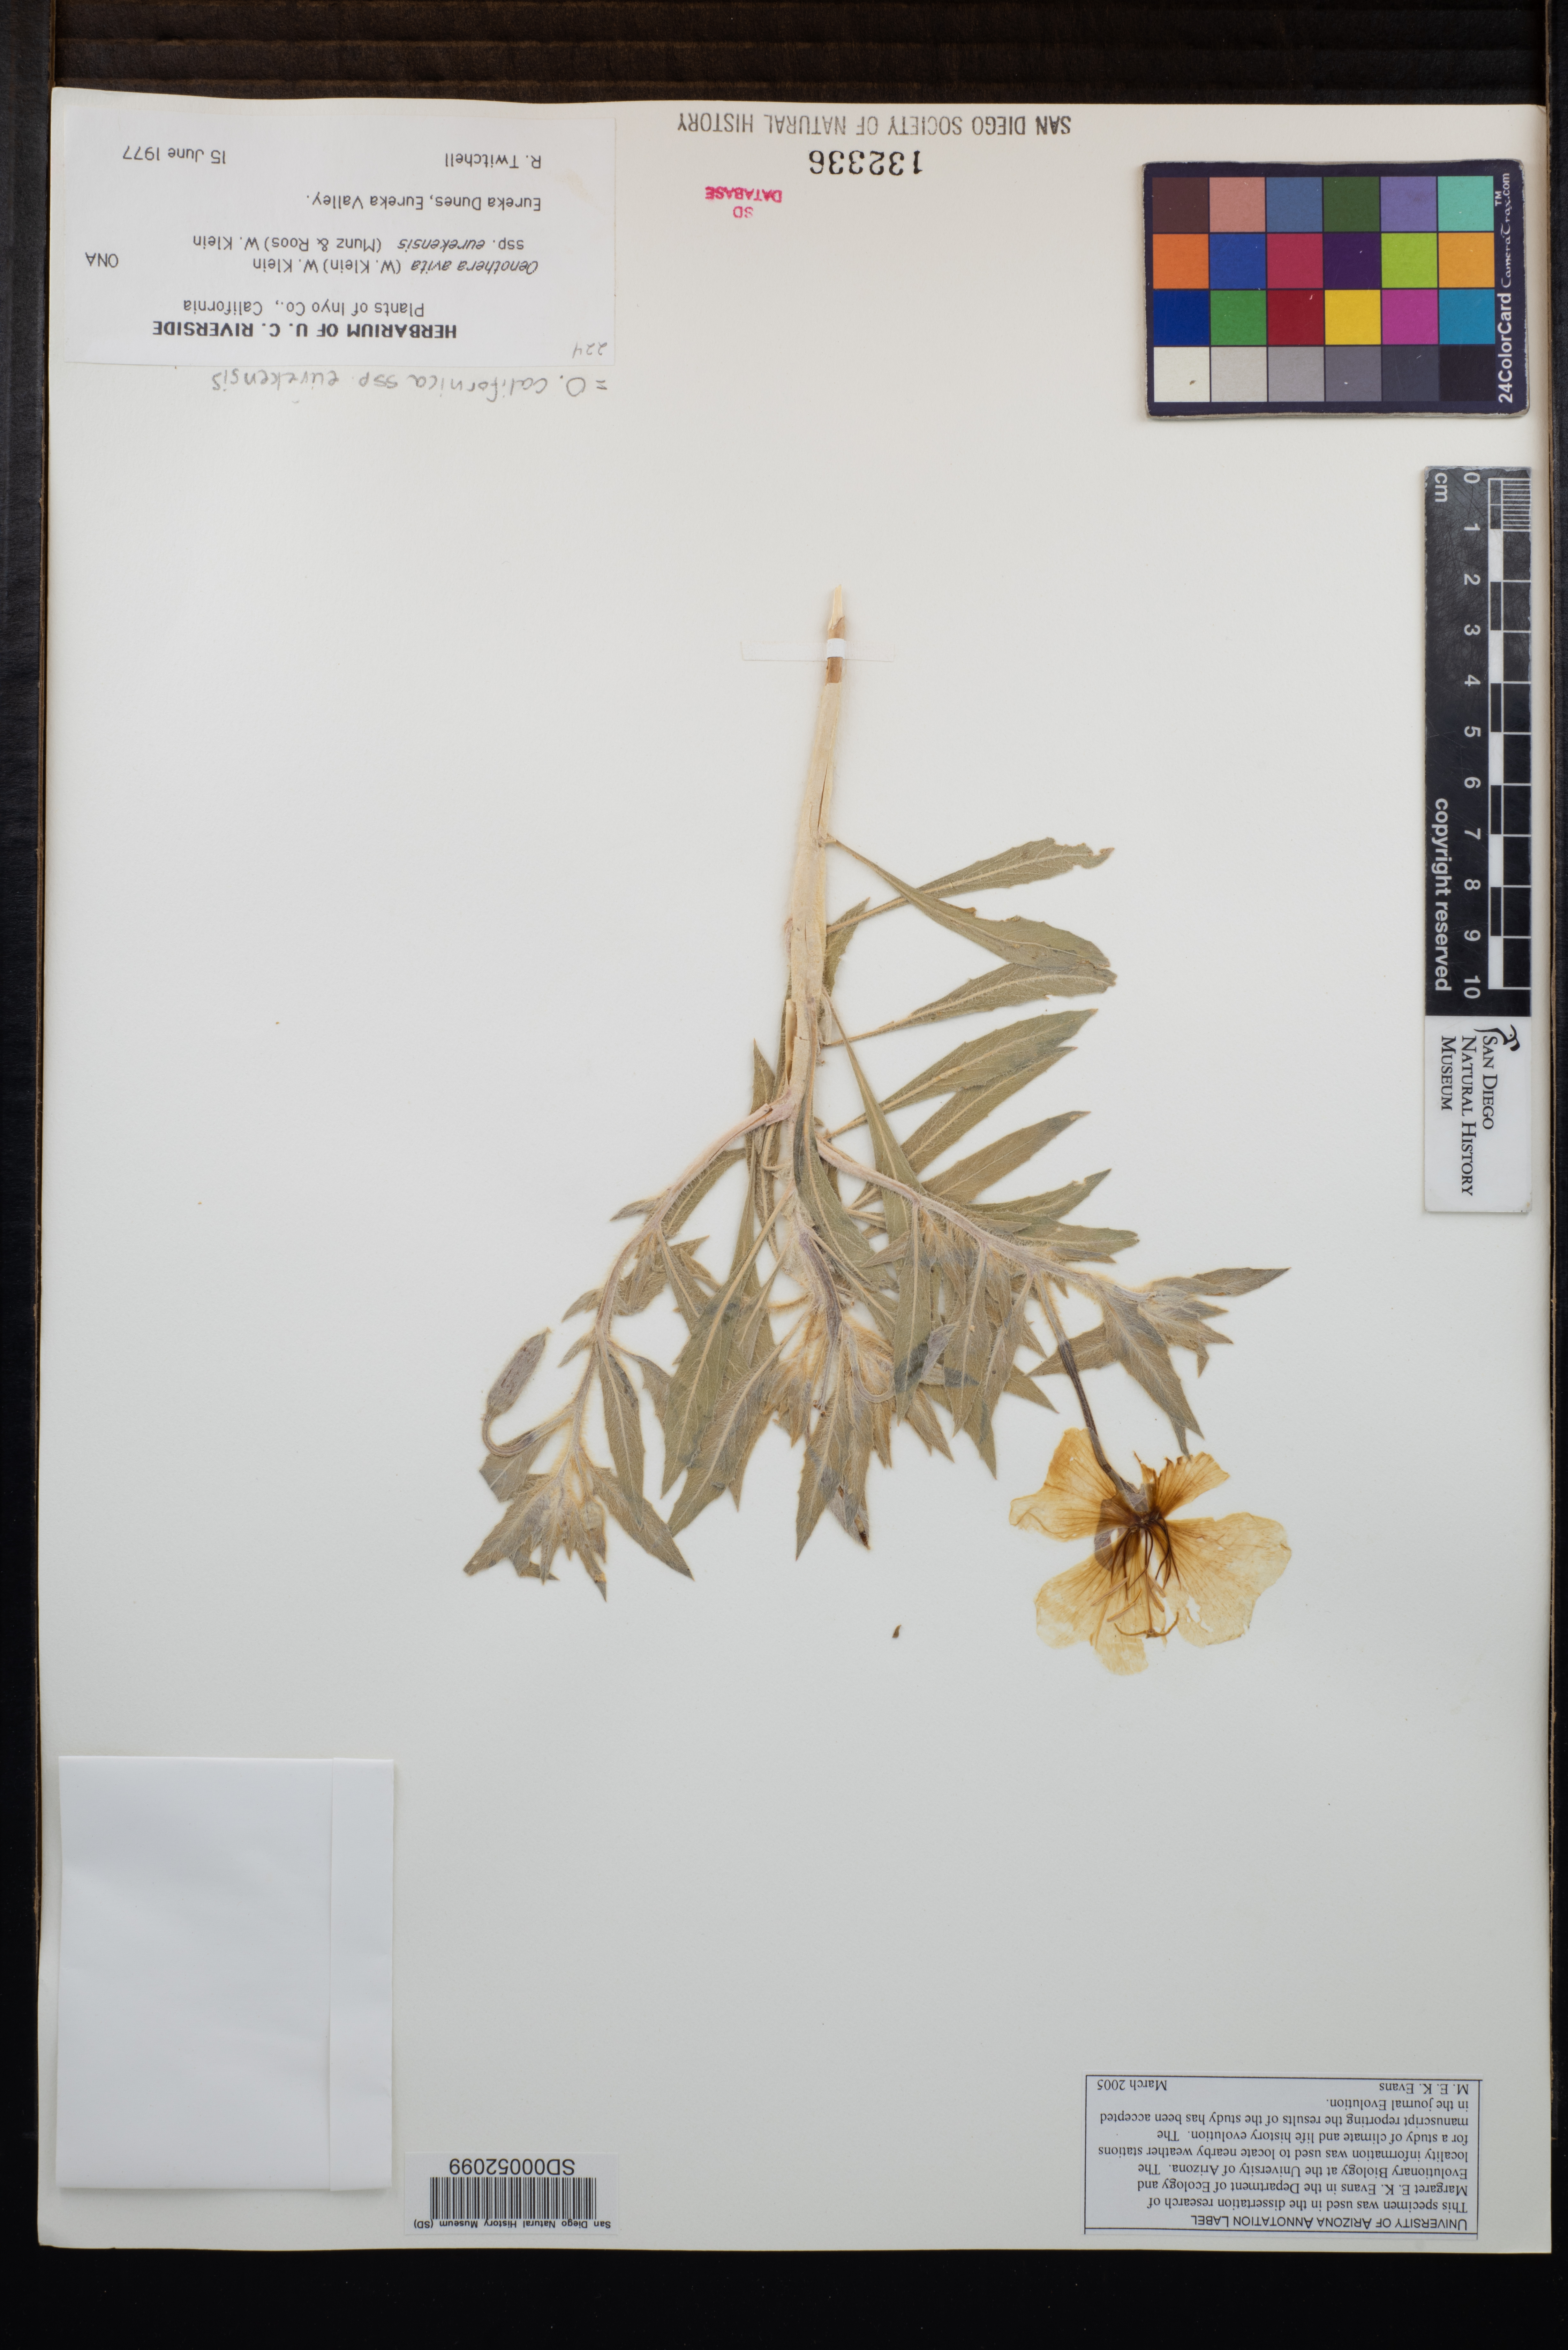 Oenothera californica subsp. eurekensis image